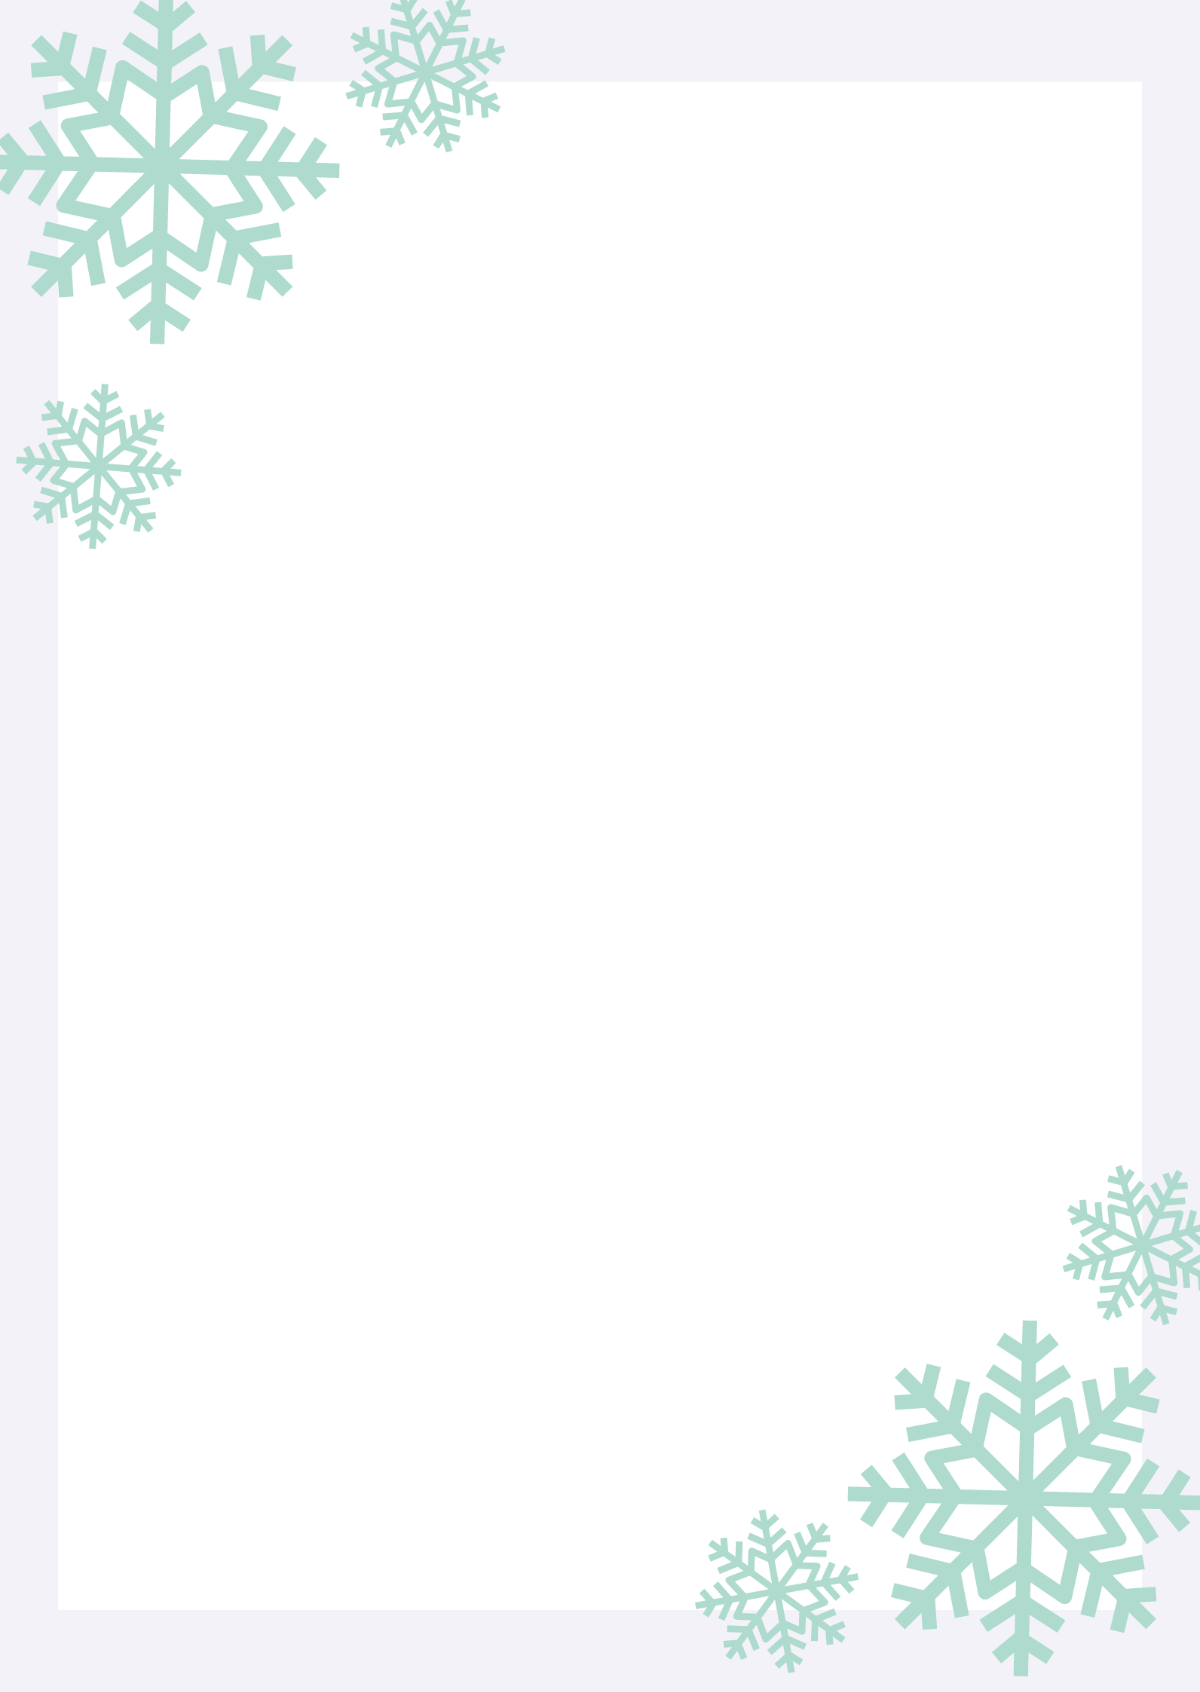 Snowflake Page Border Template